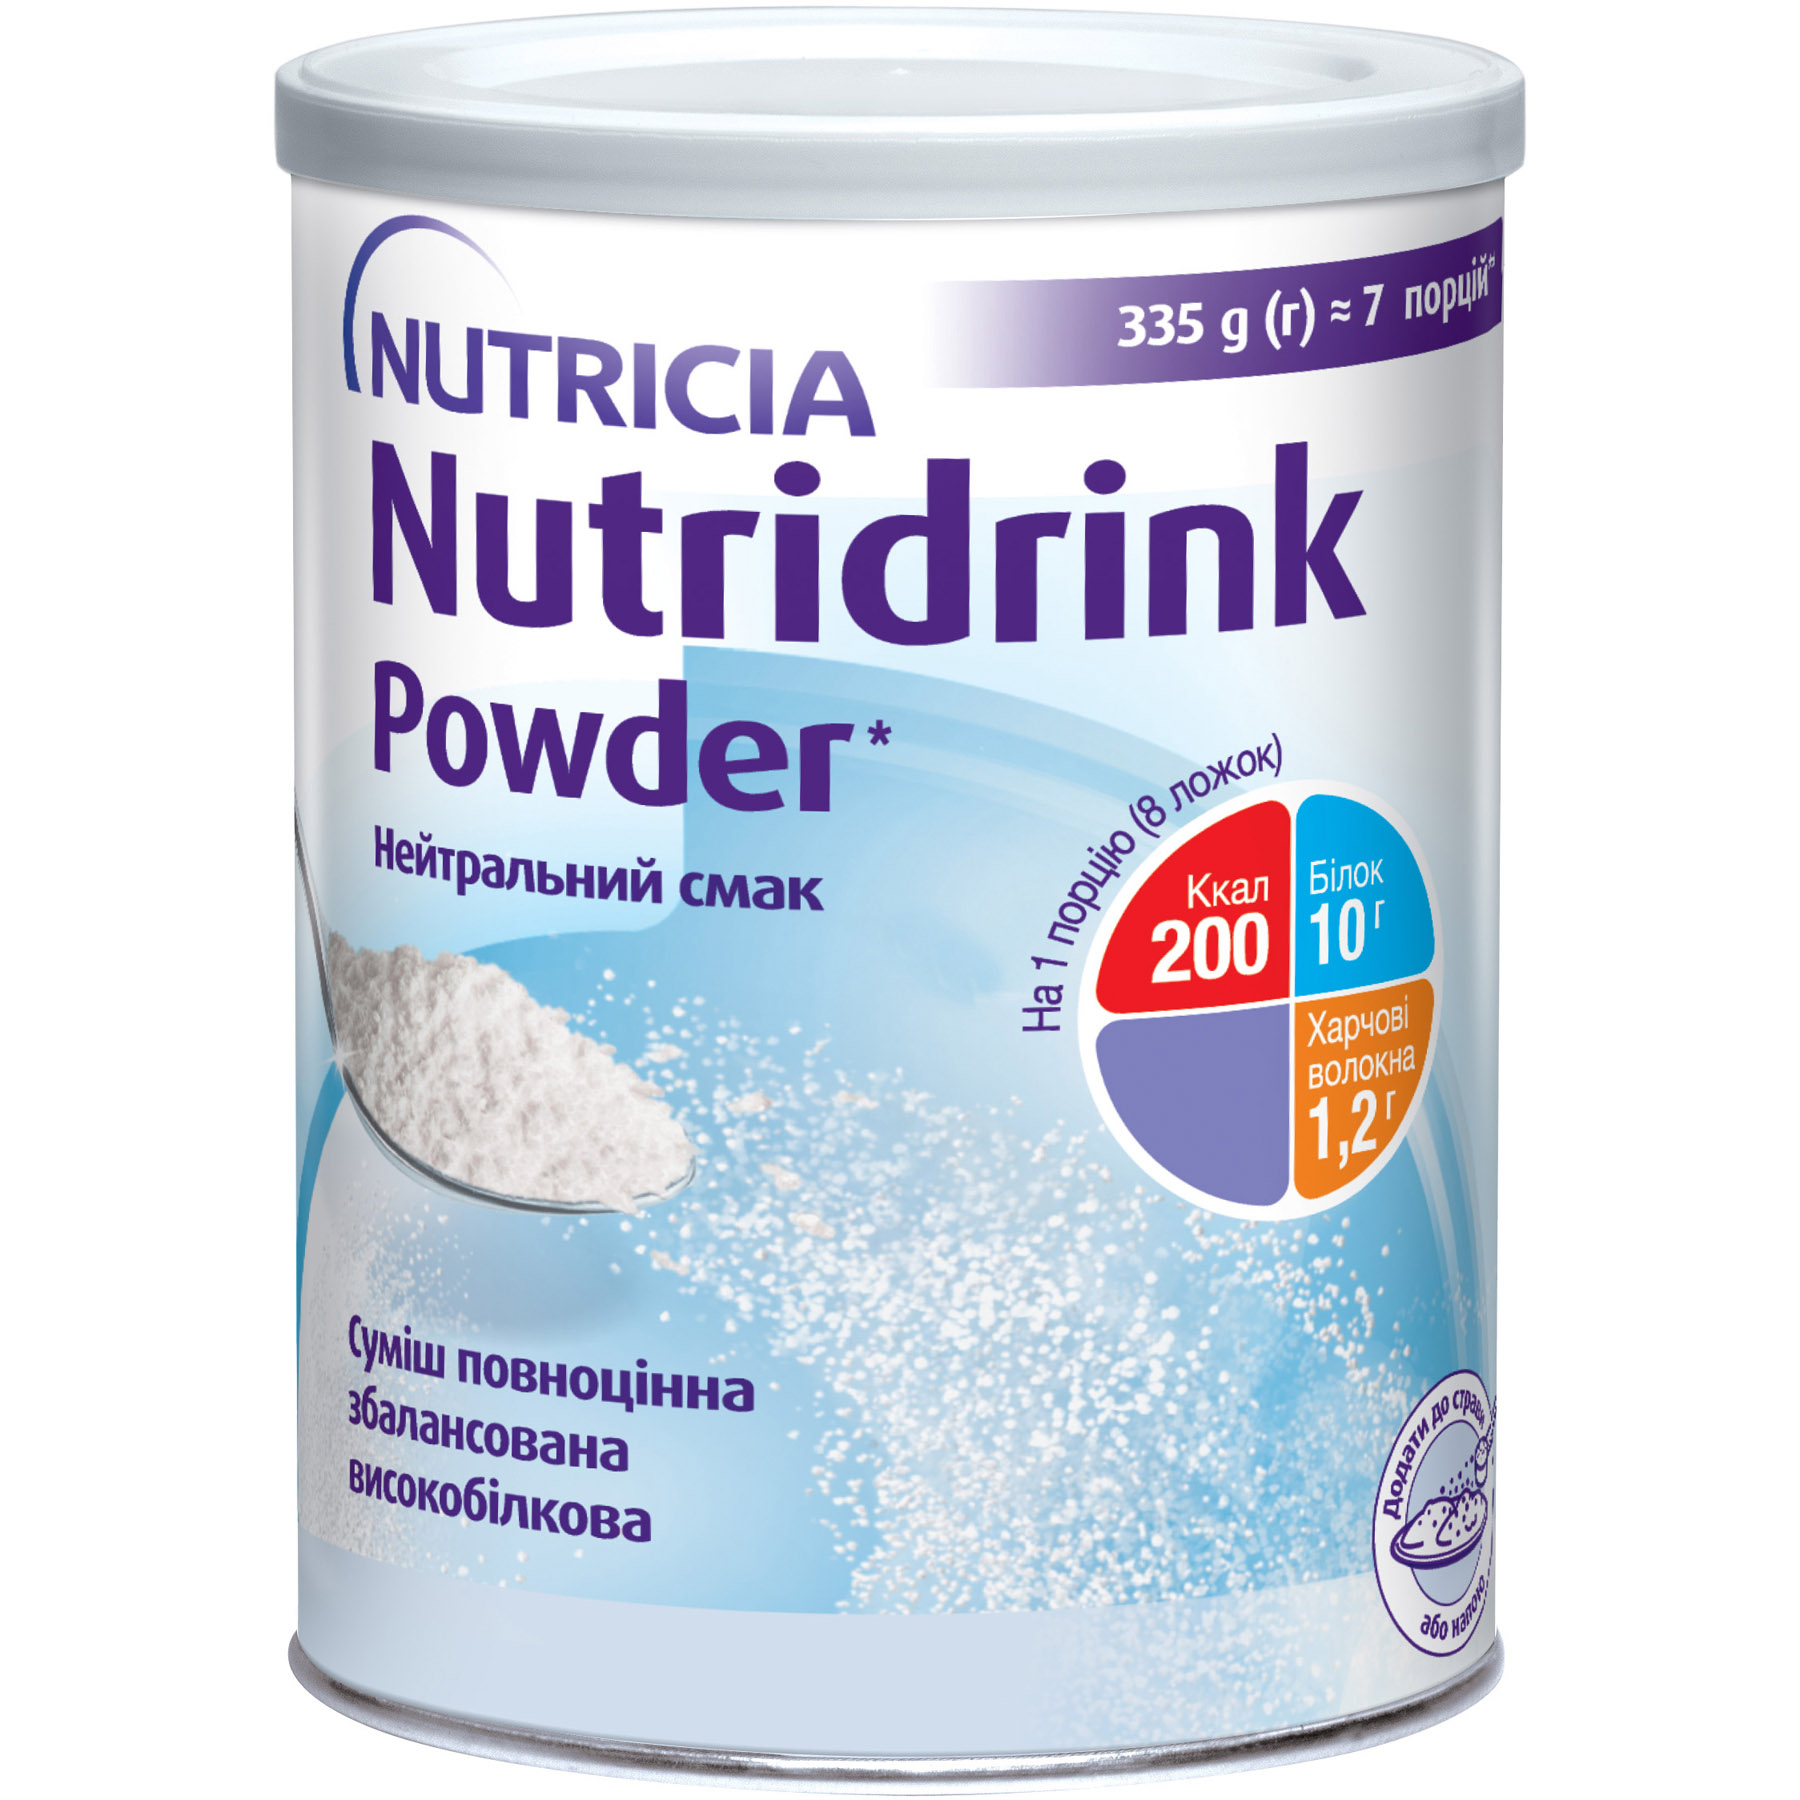 Ентеральне харчування Nutricia Nutridrink Powder з нейтральним смаком 335 г - фото 1